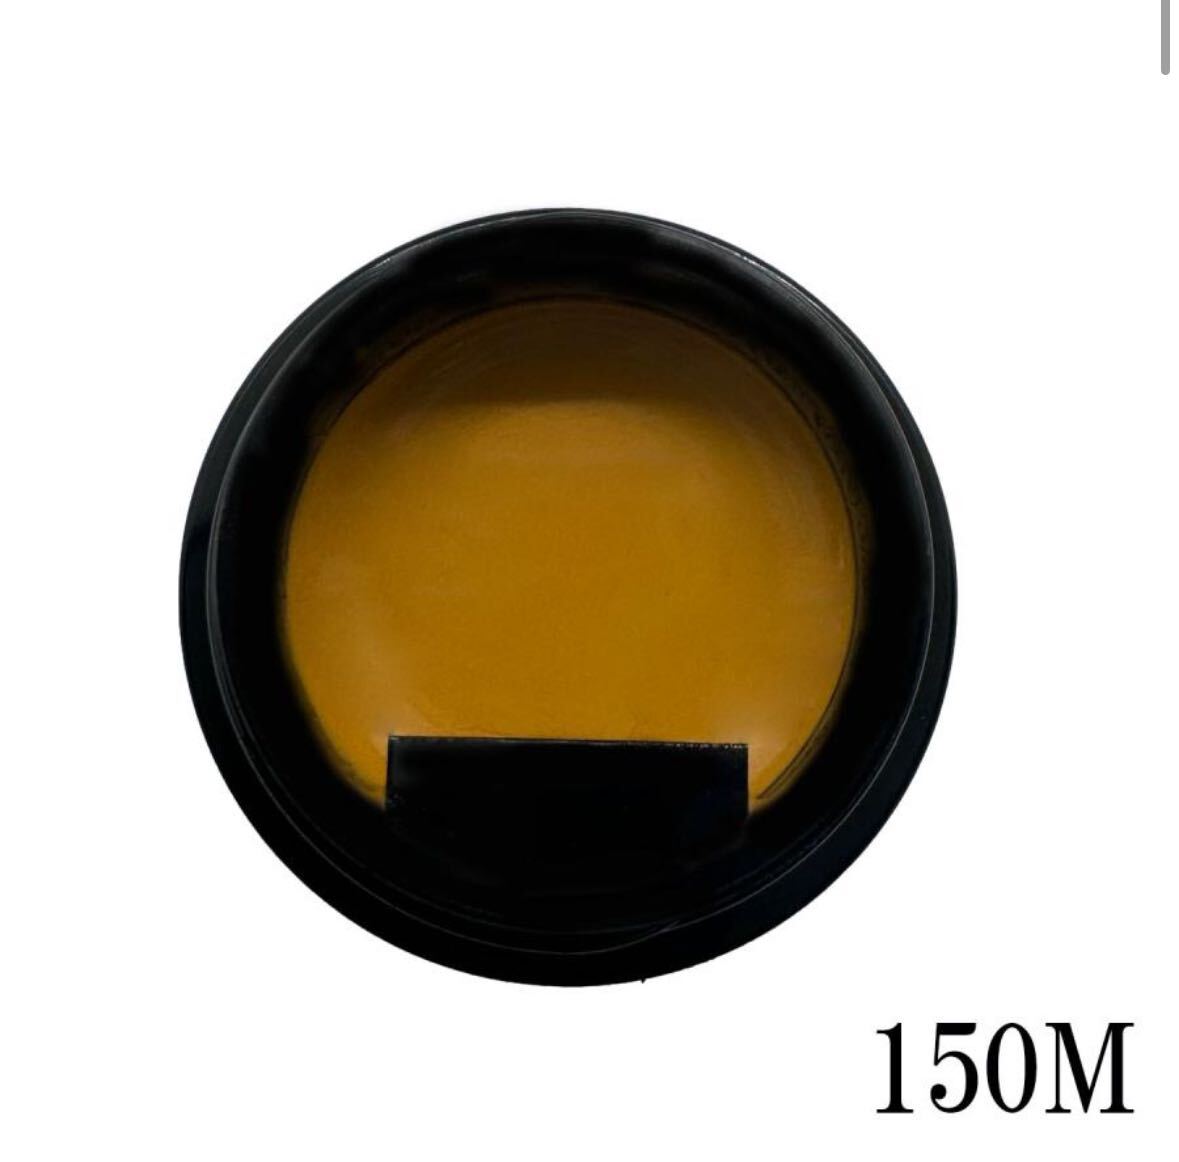 LinoGel リノジェル カラージェル 5g LED/UVライト対応 150M ハニーバター honey butter プロフェショナル ジェルネイル カラー ネイル_画像4